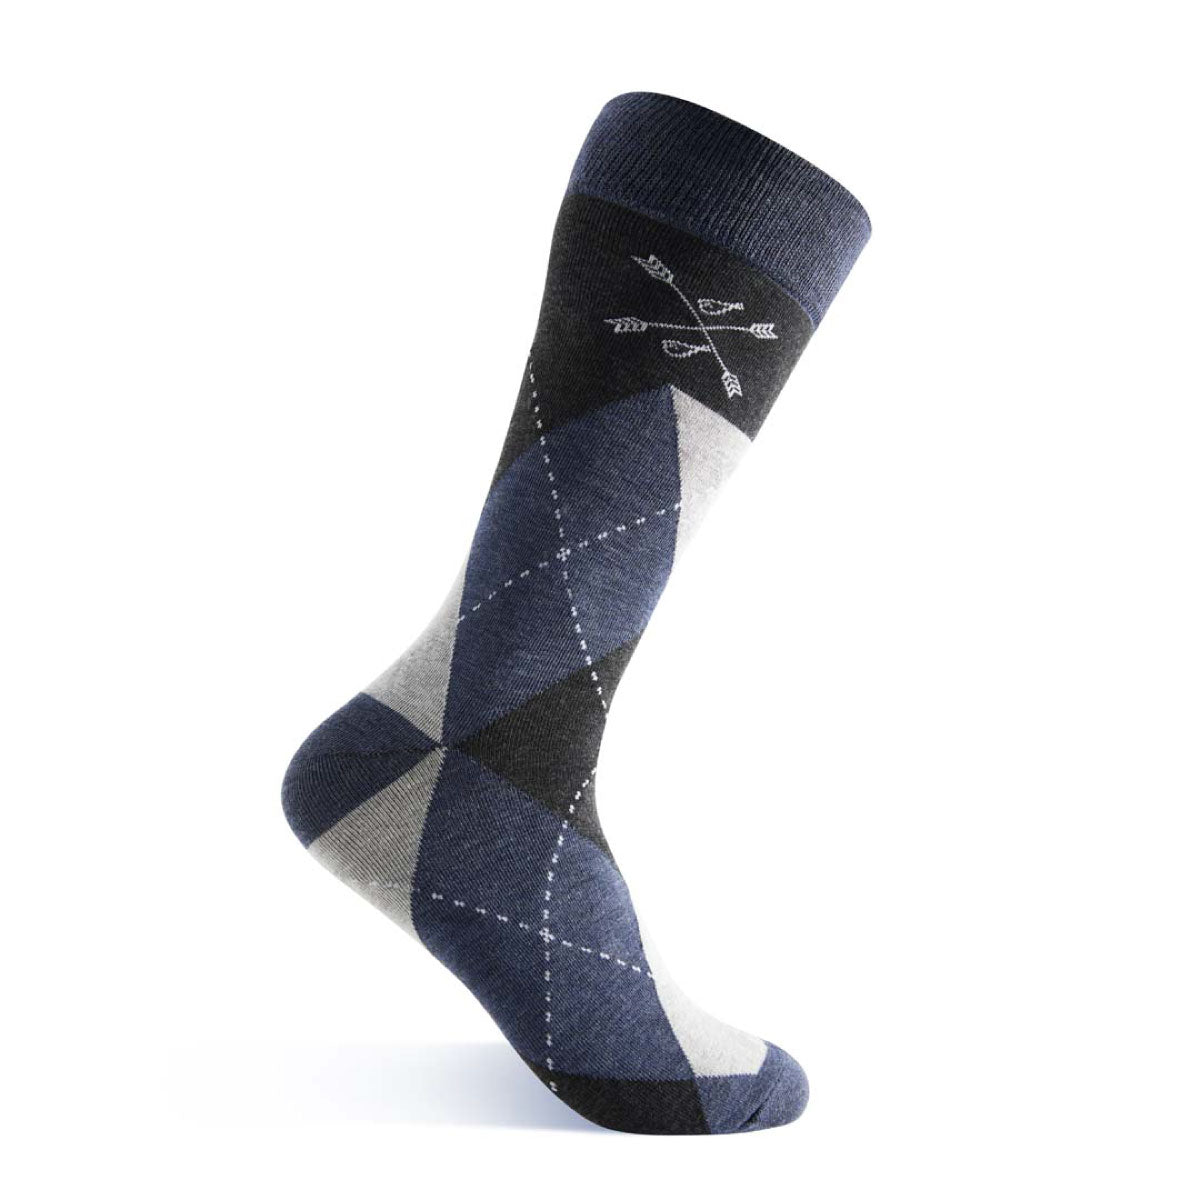 blue, grey, and charcoal mens argyle dress socks